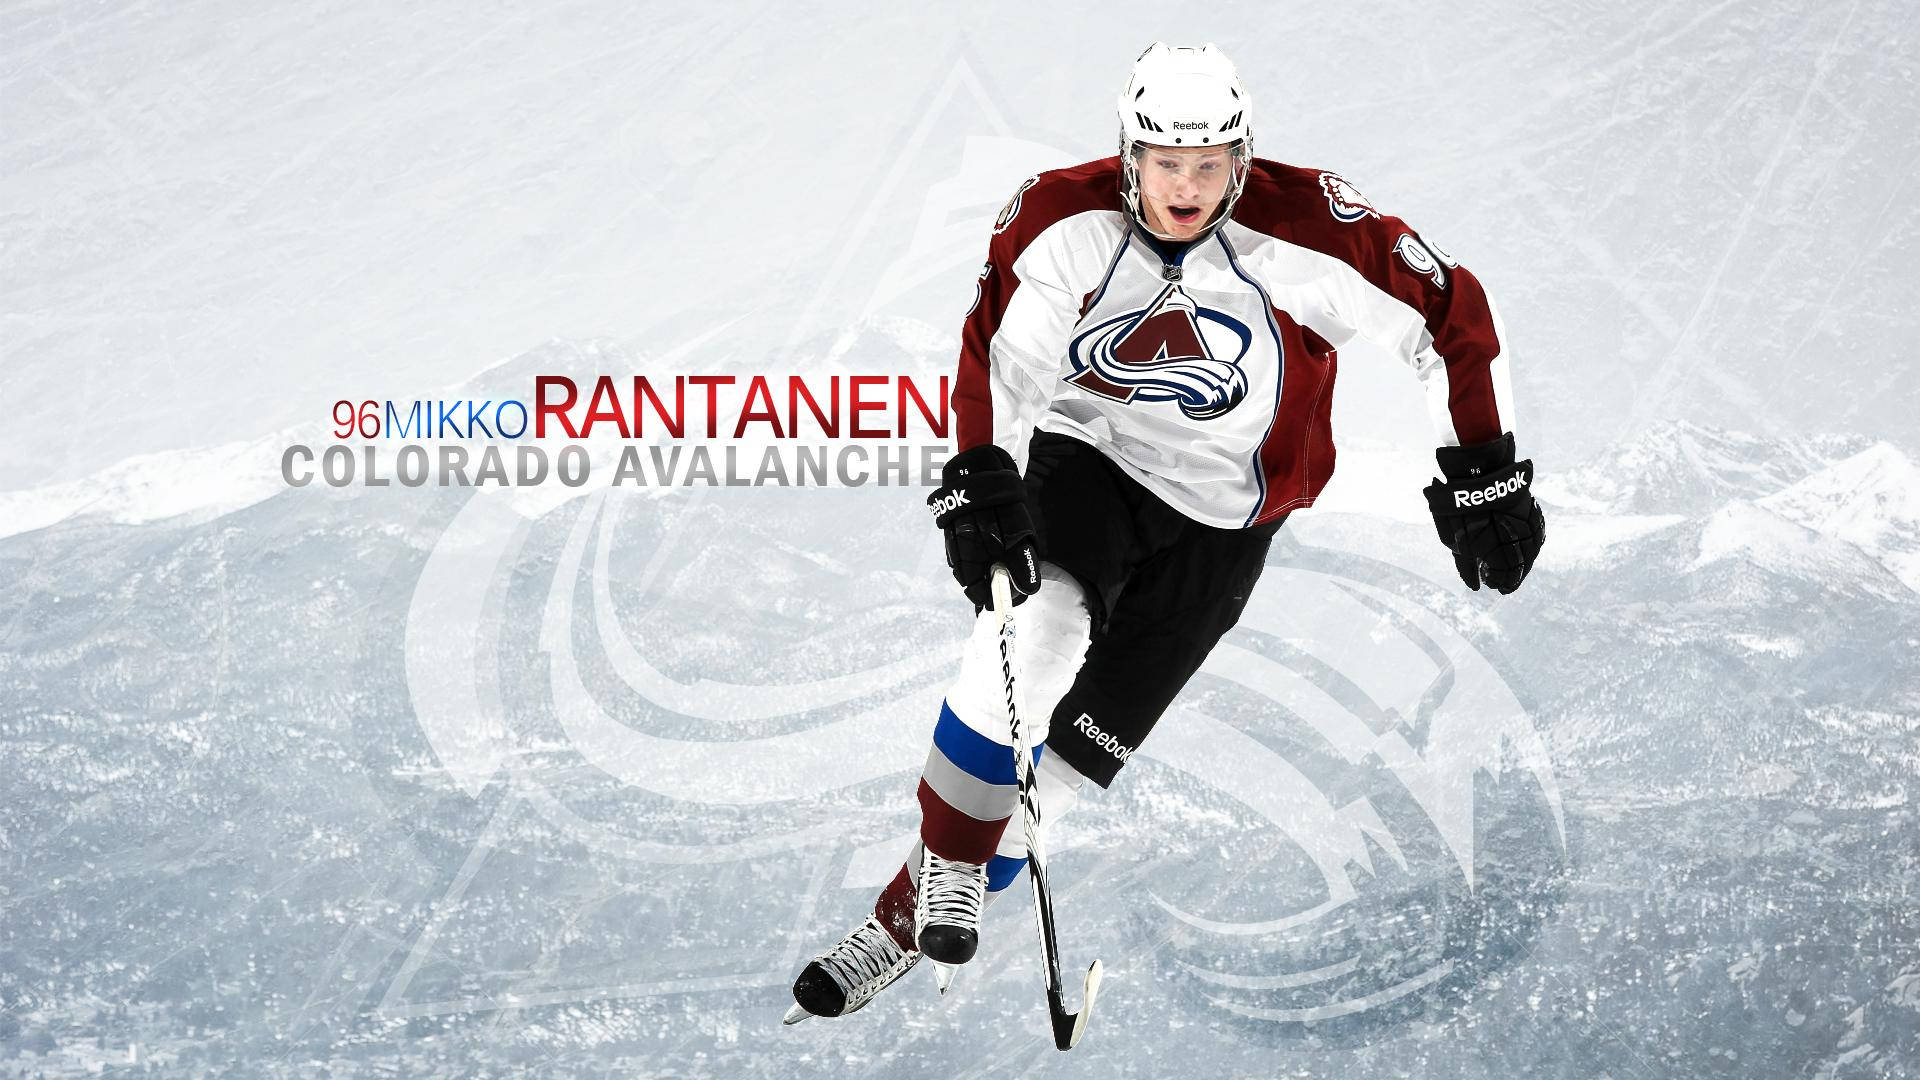 Mikko Rantanen krydsede benene, mens han skøjtede og holdt hockeystang tapet. Wallpaper